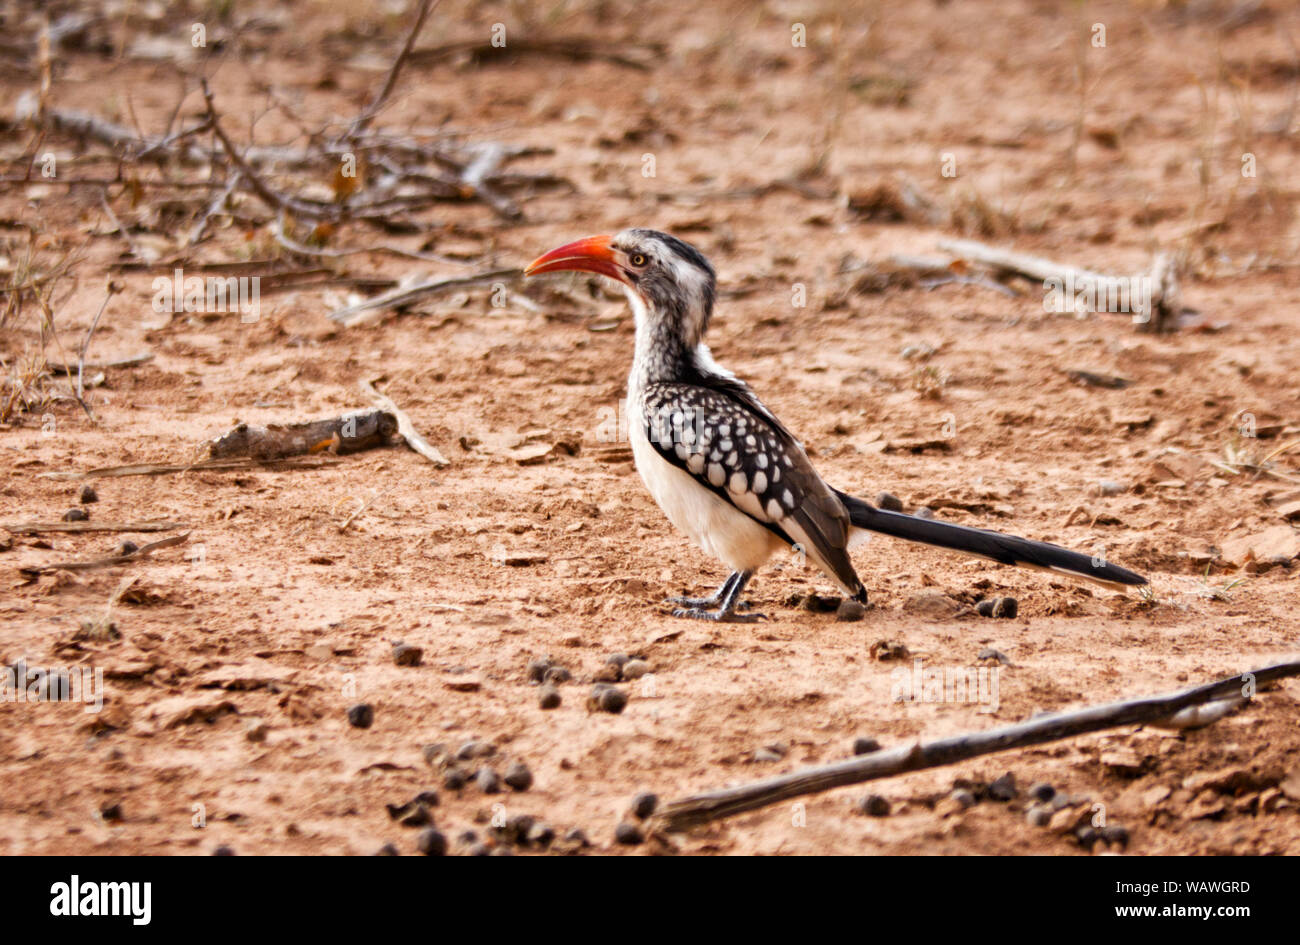 hornbill birds on the sand on the ground, Botswana, Africa. Stock Photo